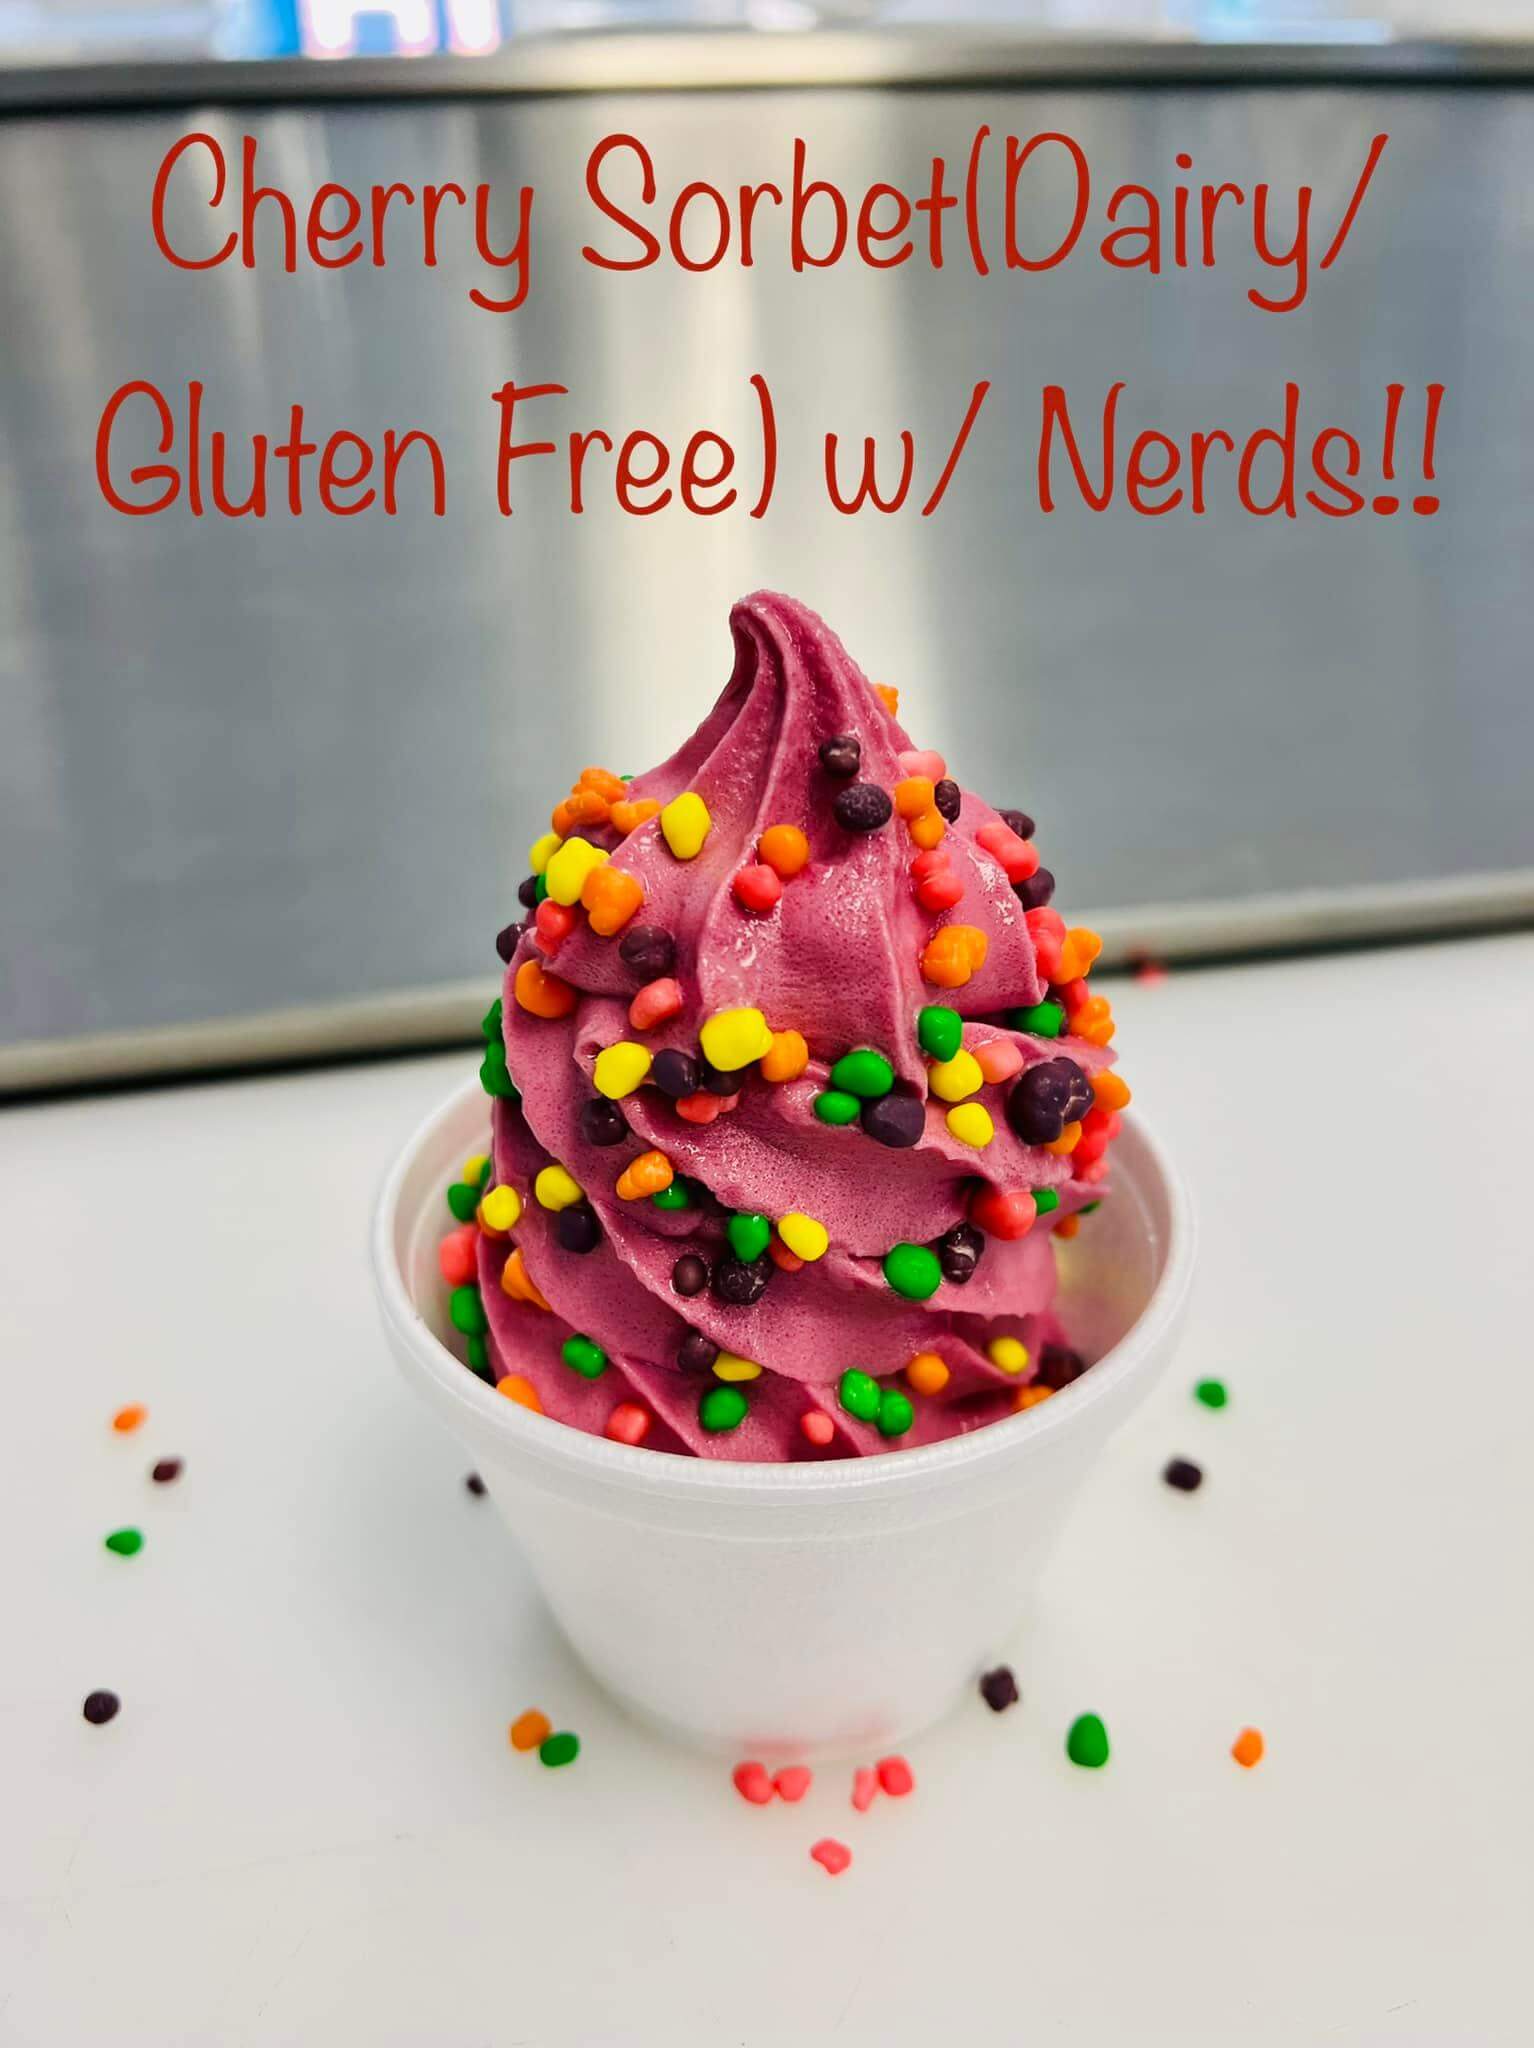 Cherry sorbet dairy gluten free with nerds!